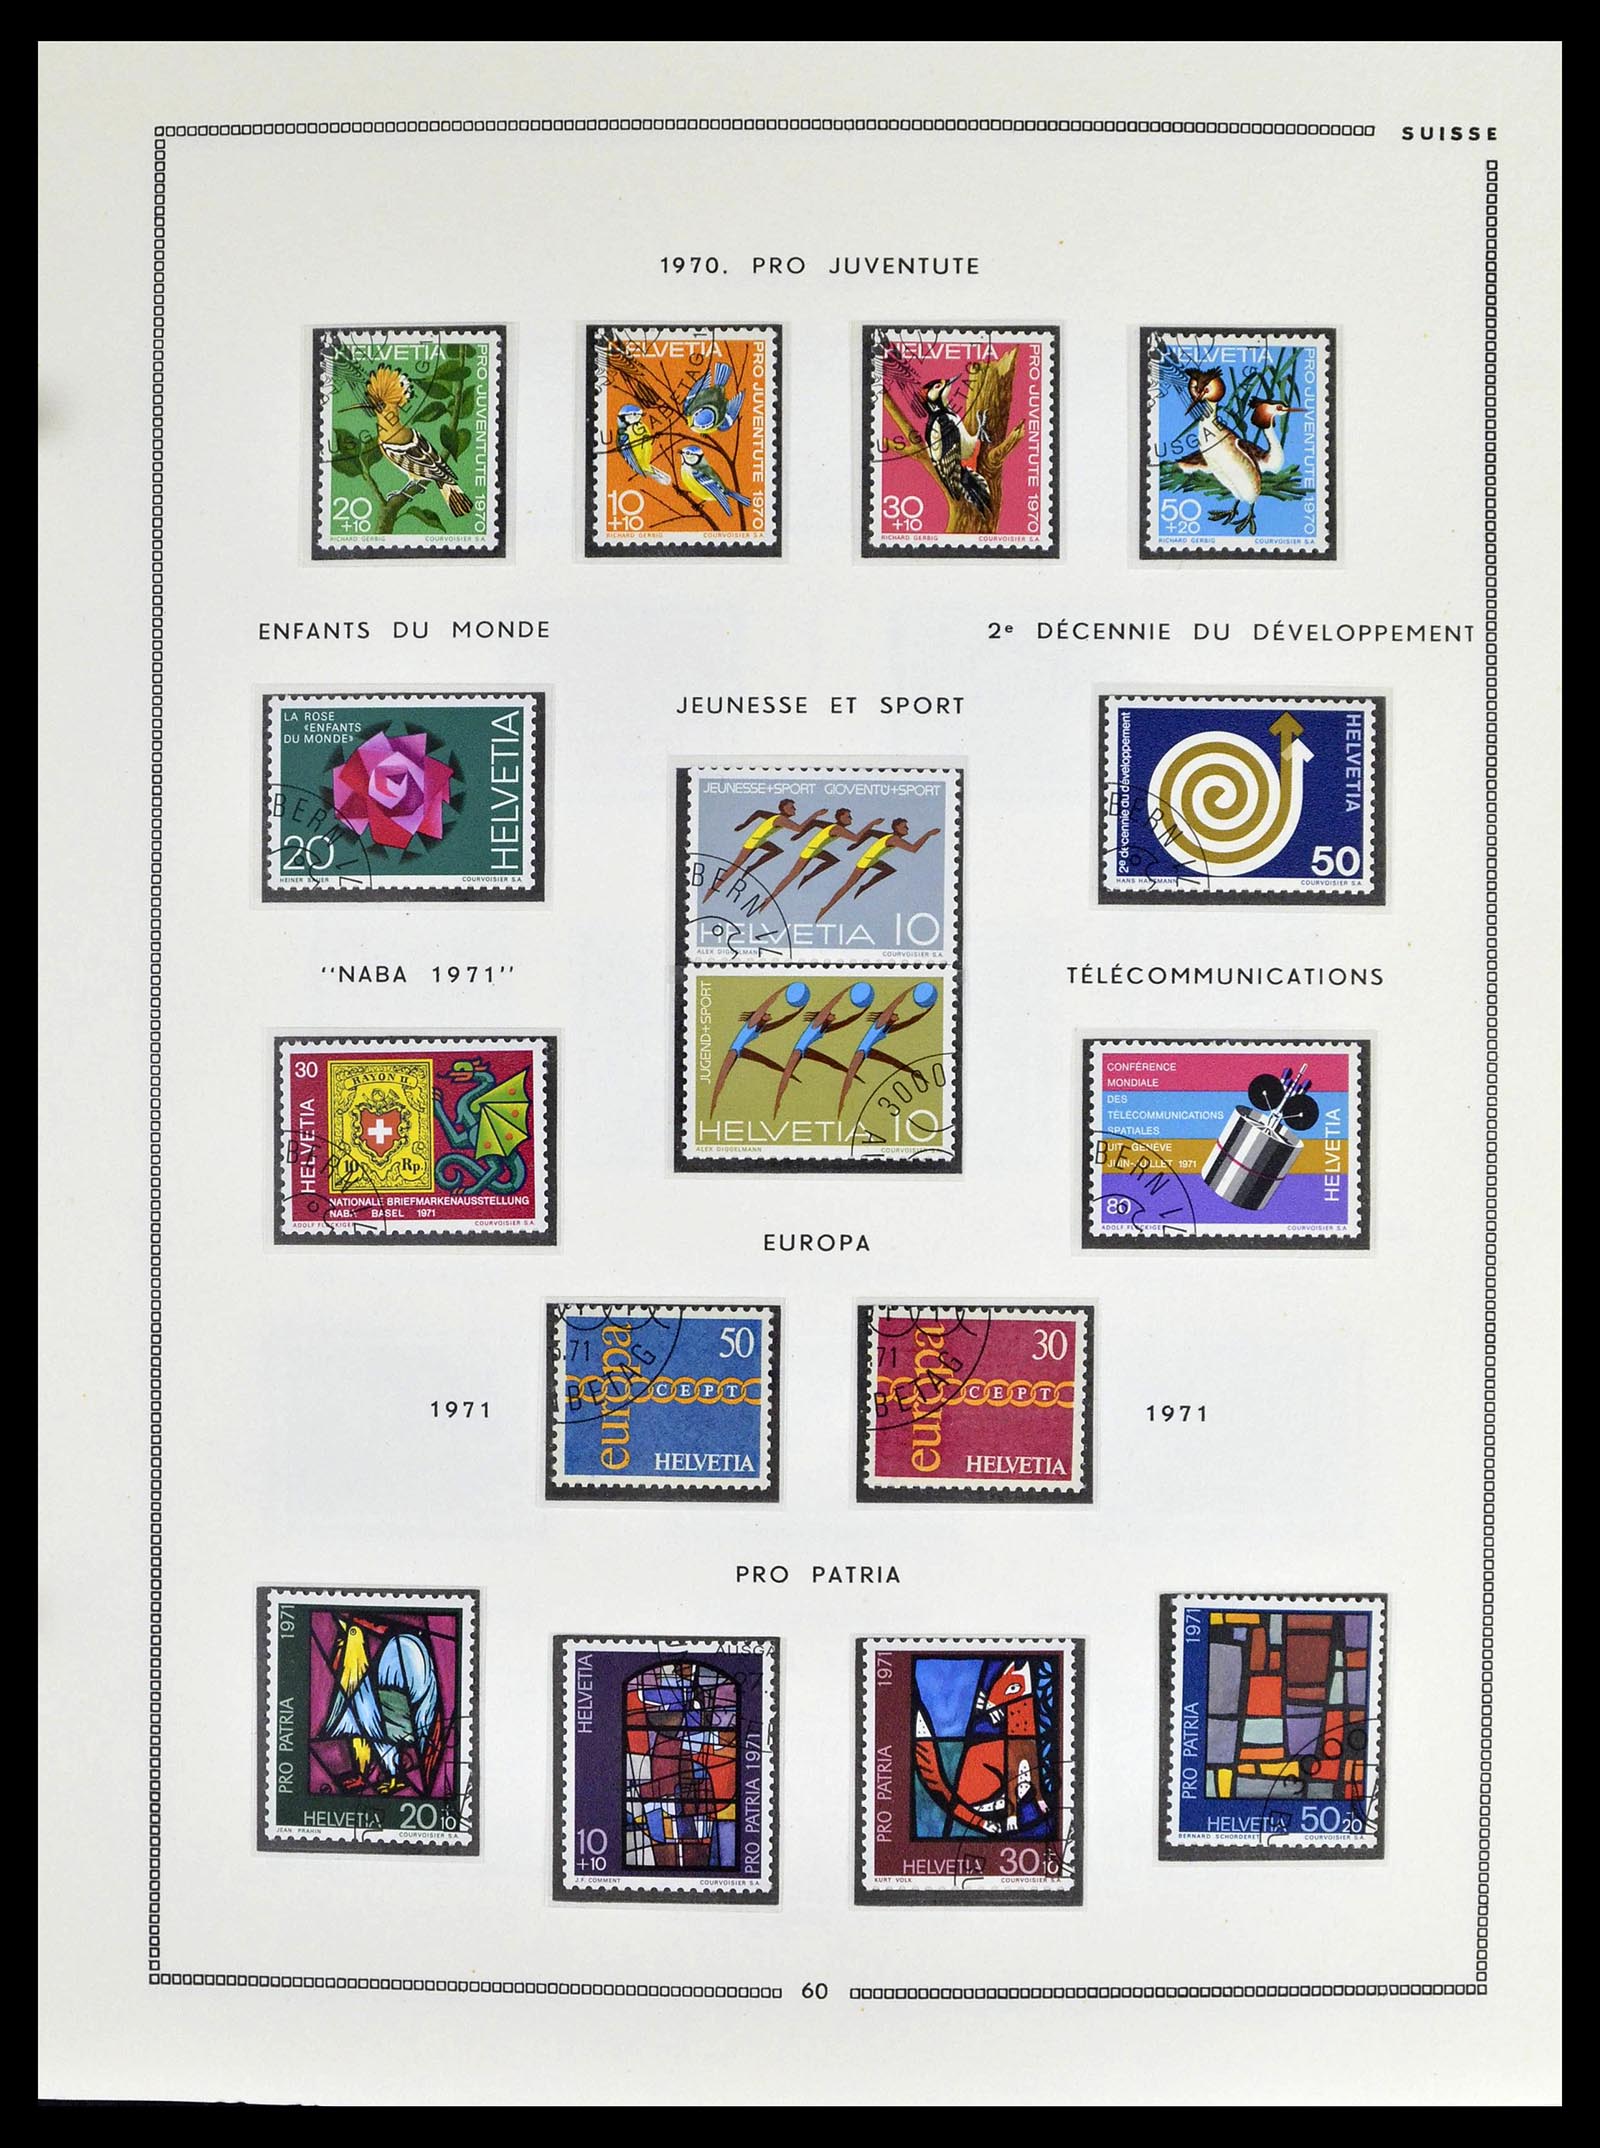 39094 0058 - Stamp collection 39094 Switzerland 1850-2005.